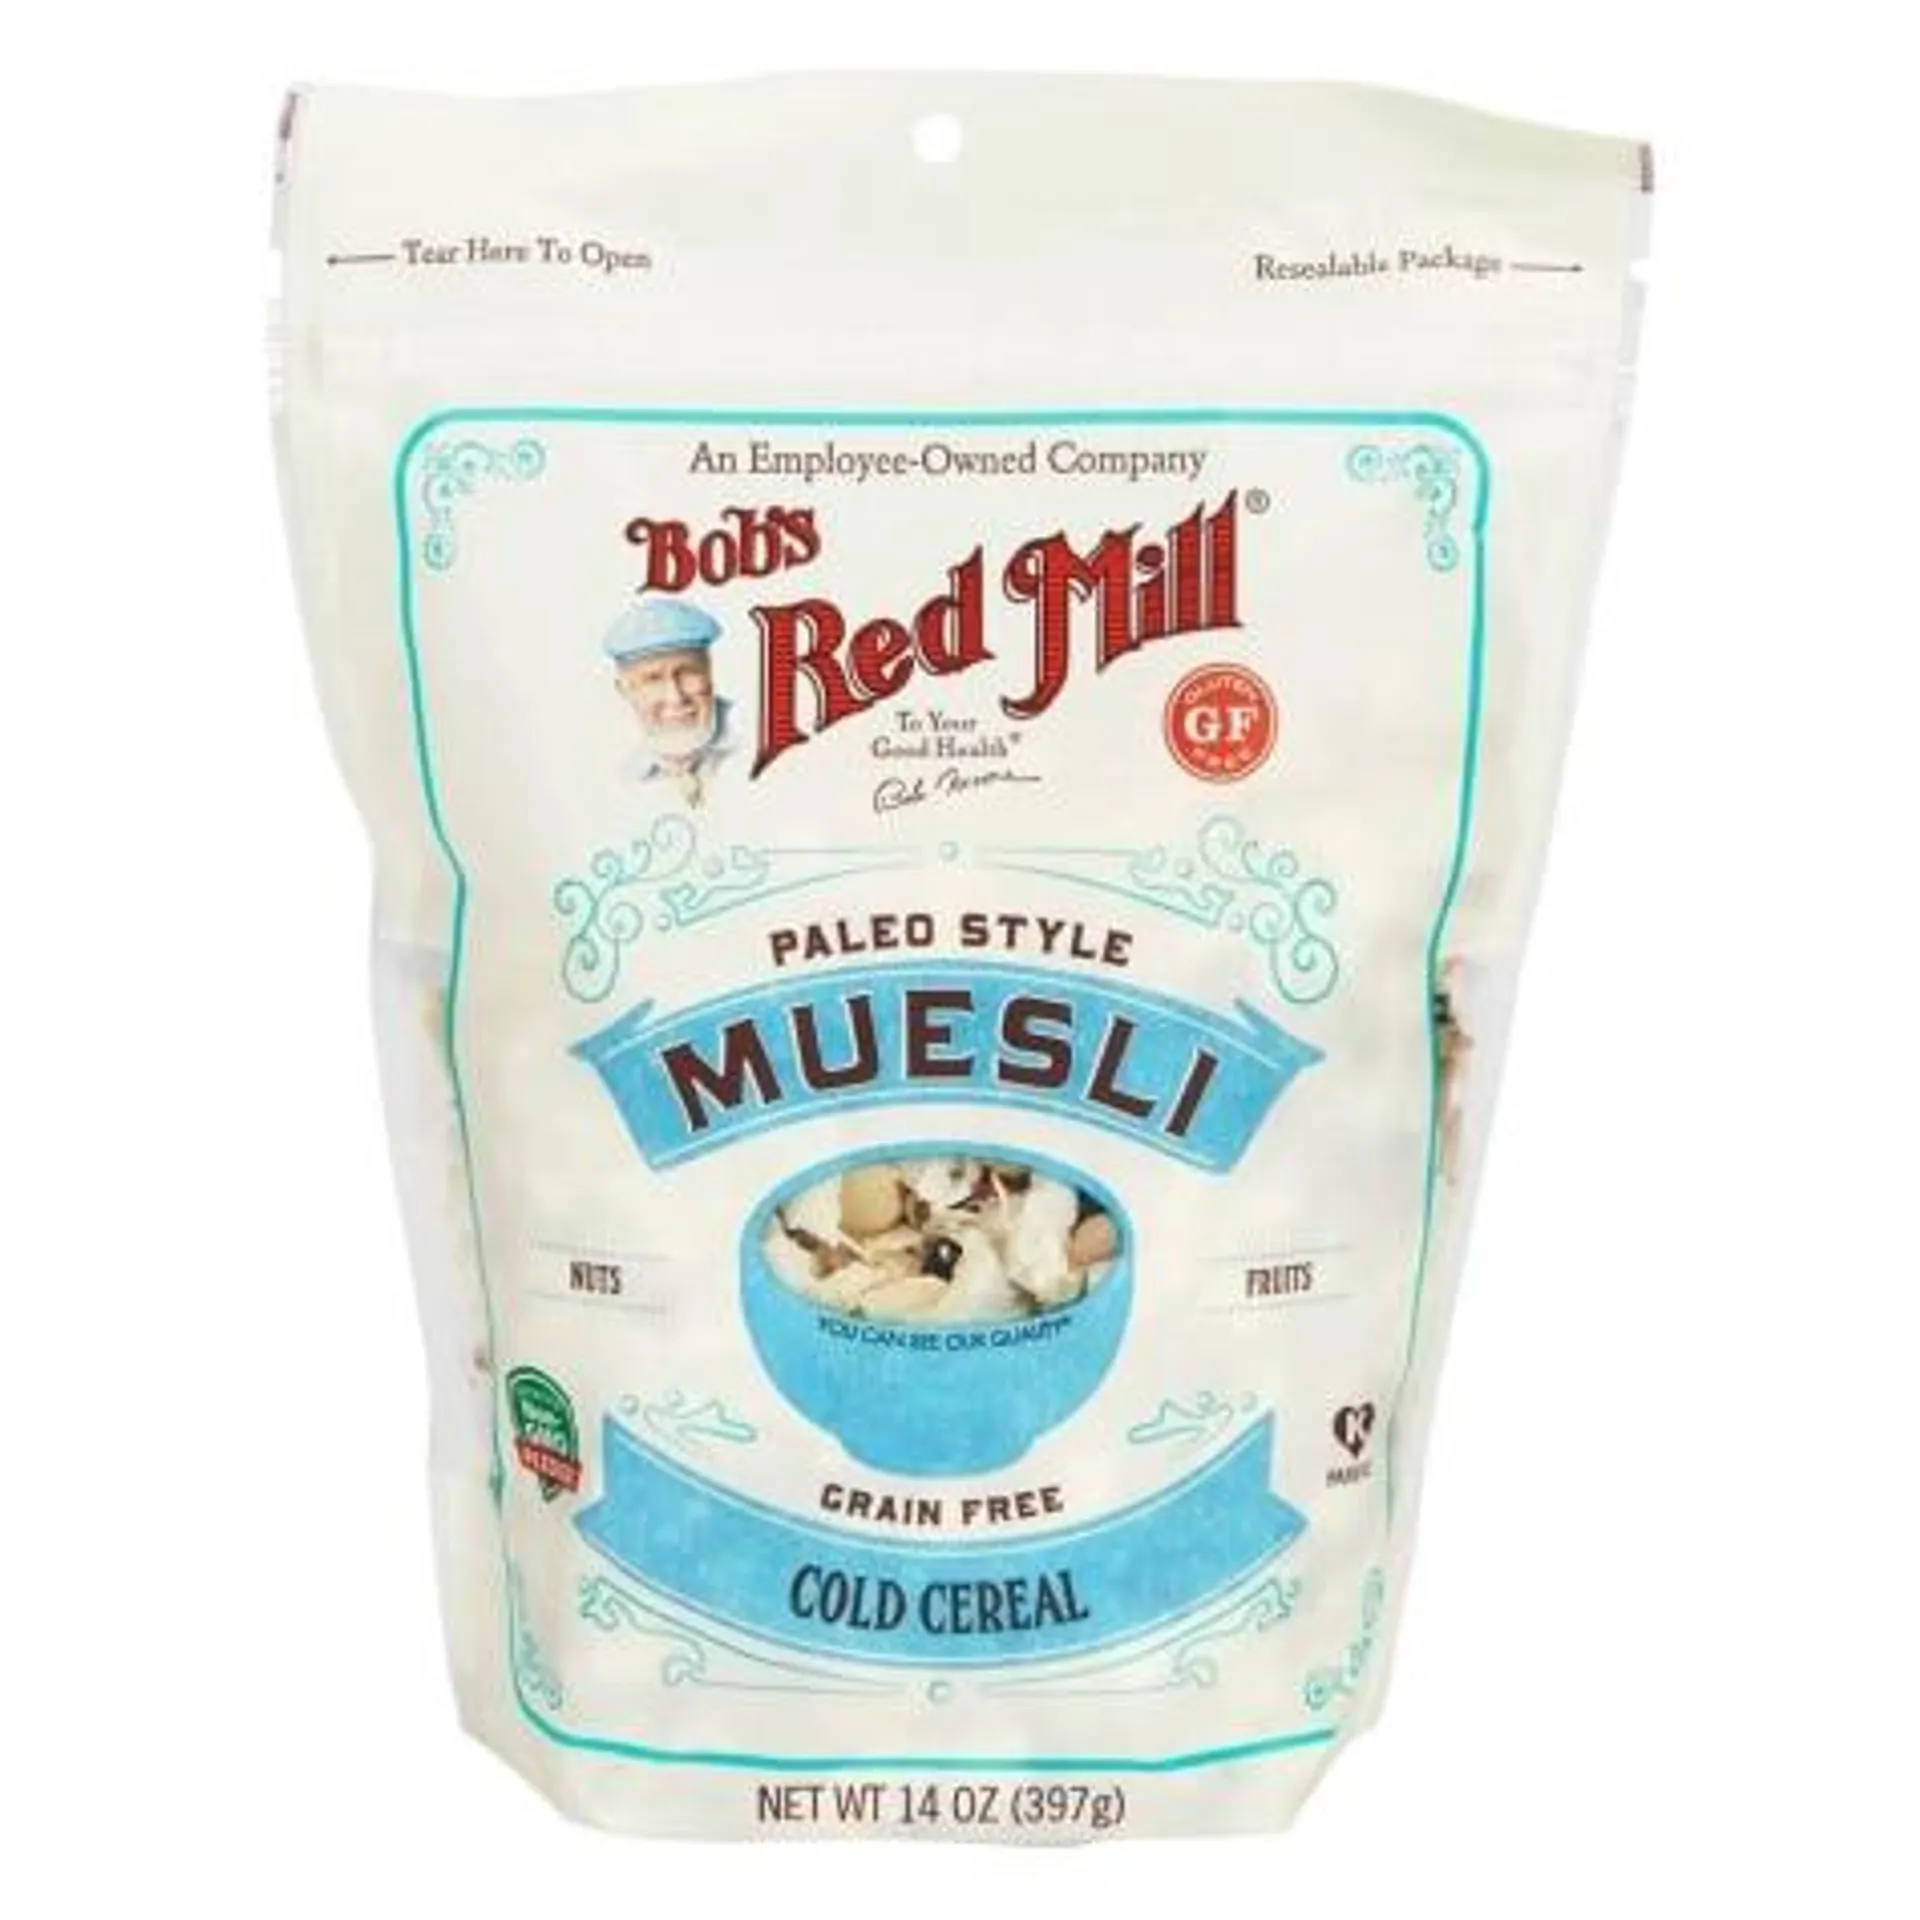 Bob's Red Mill Paleo Style Muesli Cold Cereal, 14 oz